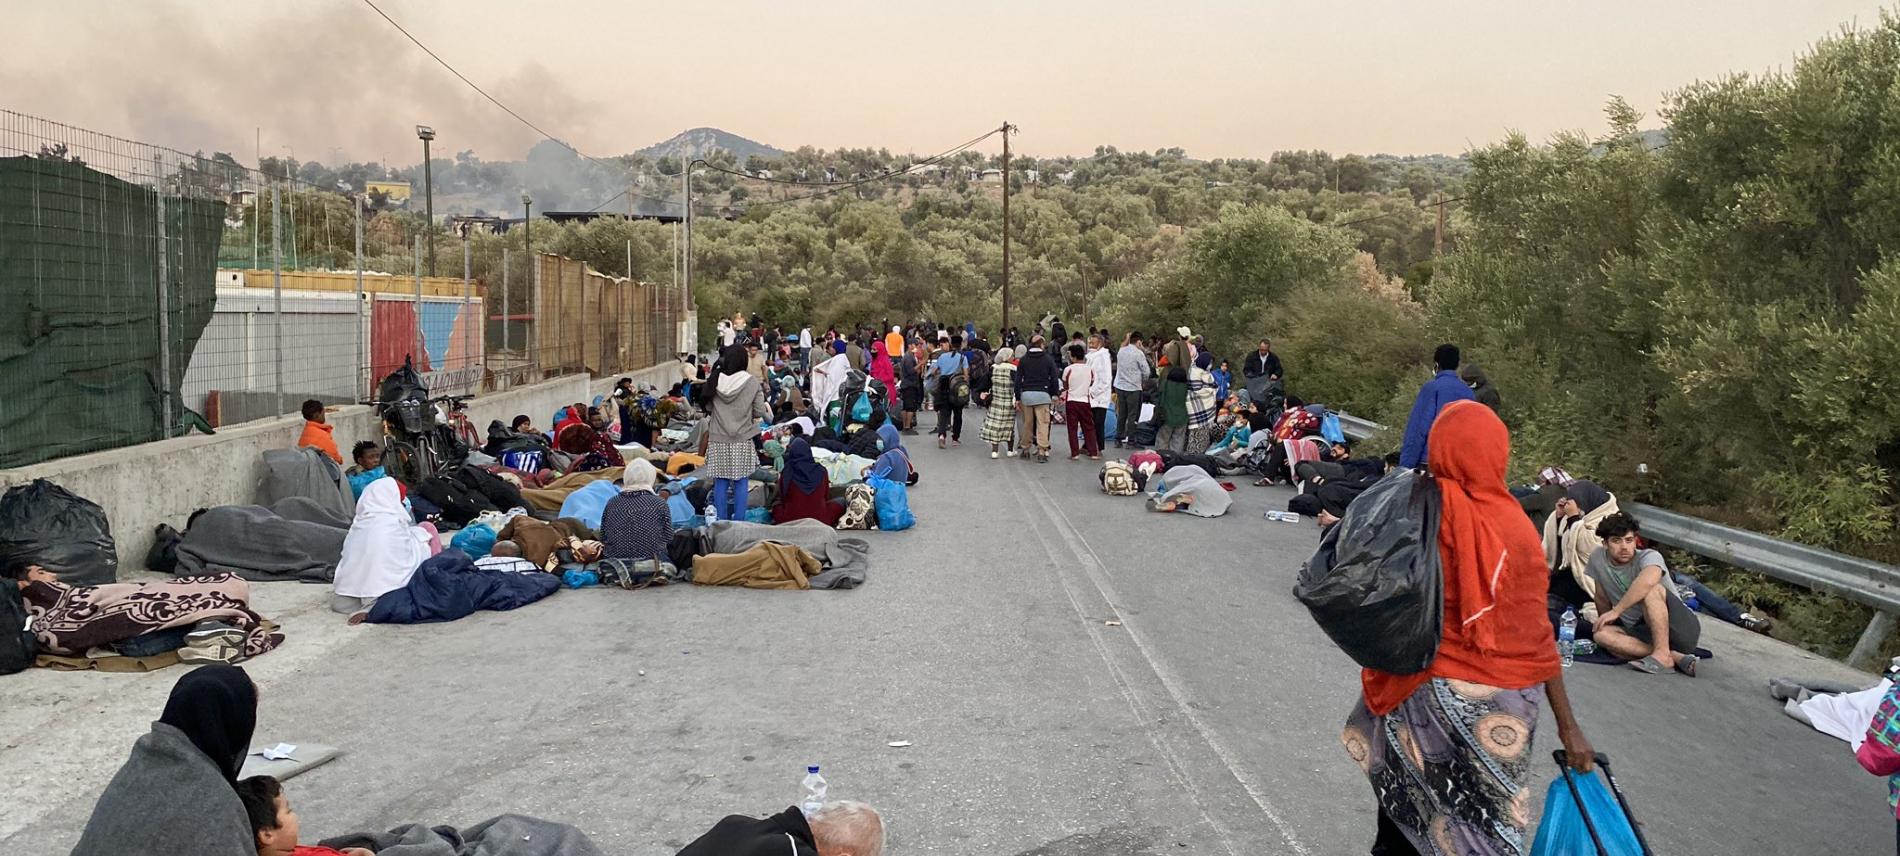 Flüchlinge auf Lesbos nach dem Feuer in Moria